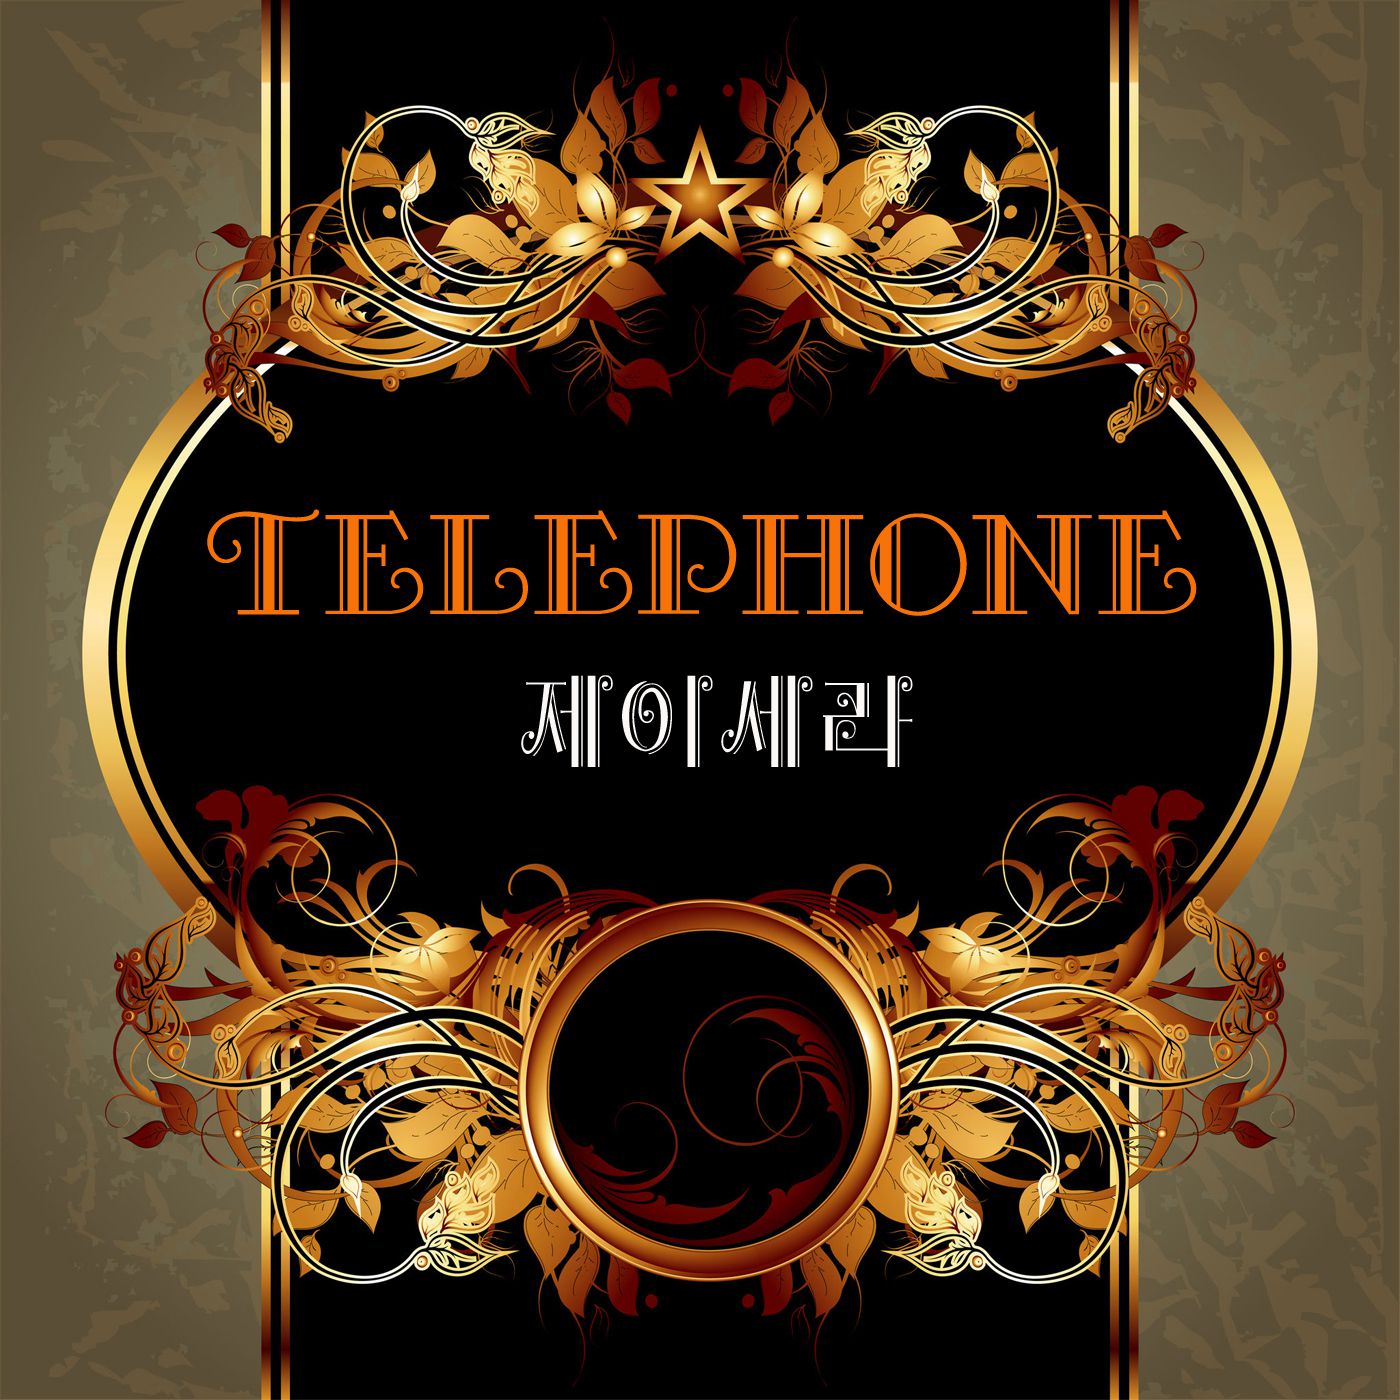 Telephone [Digital Single]